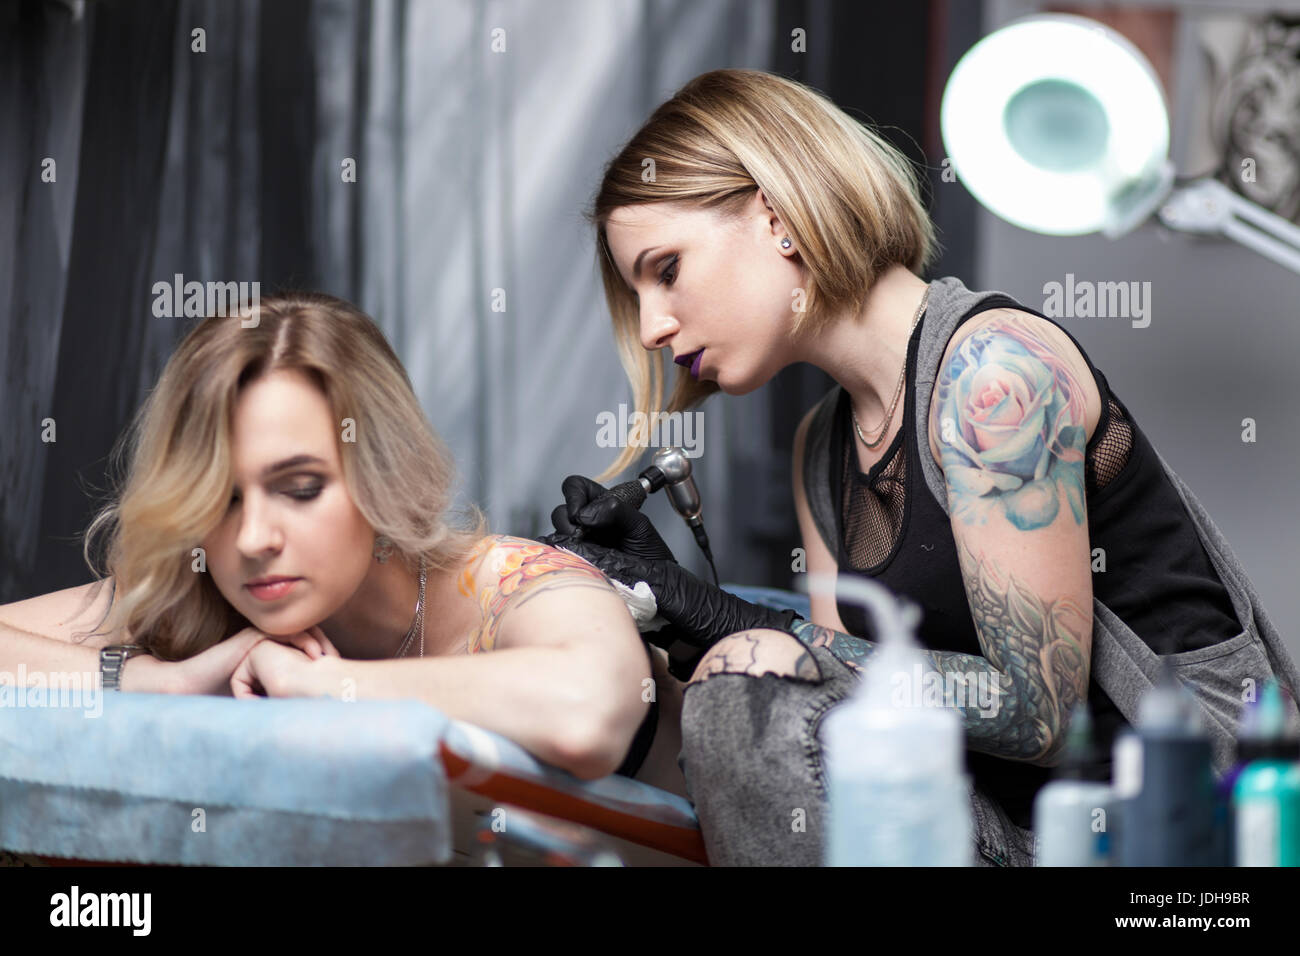 Tattoo artist in a studio Stock Photo